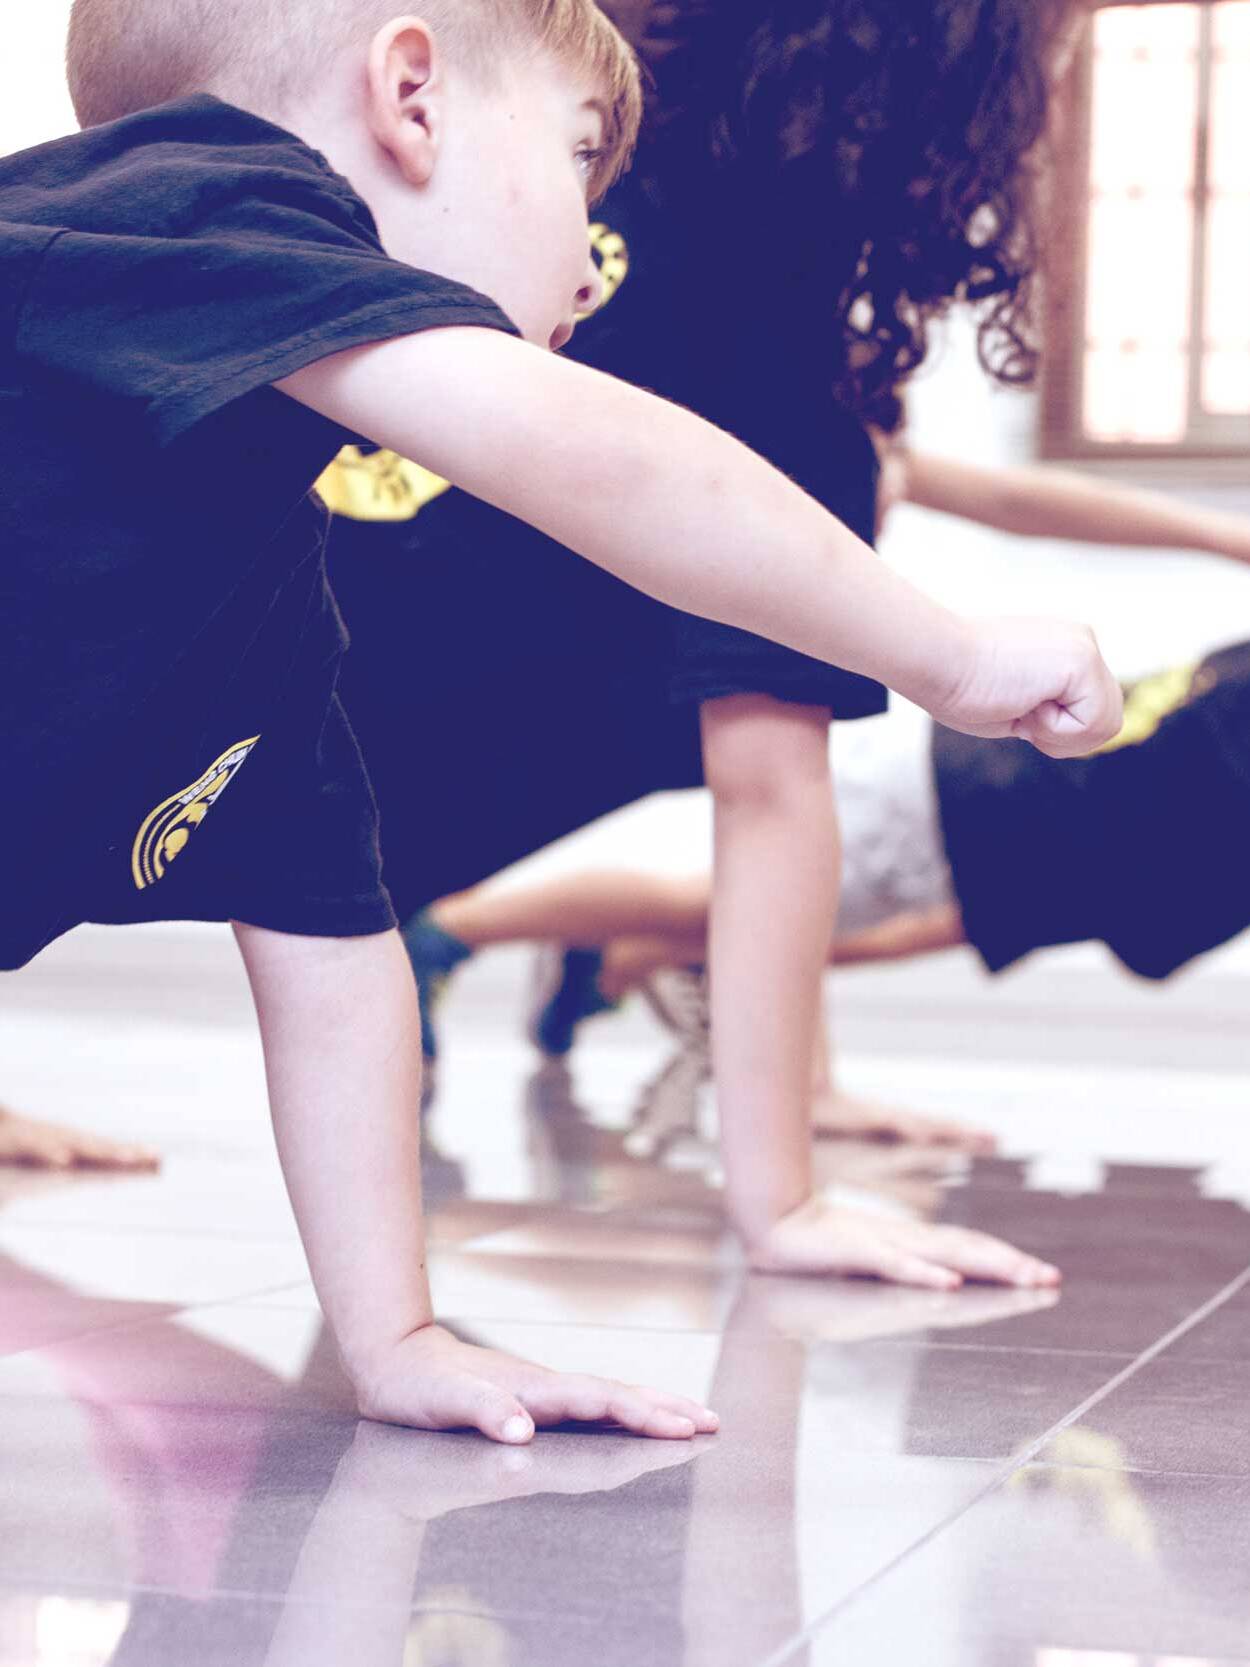 Clases de Weng Chun Kung Fu Shaolin Infantil en A Coruña, Galicia España: niños haciendo estiramientos